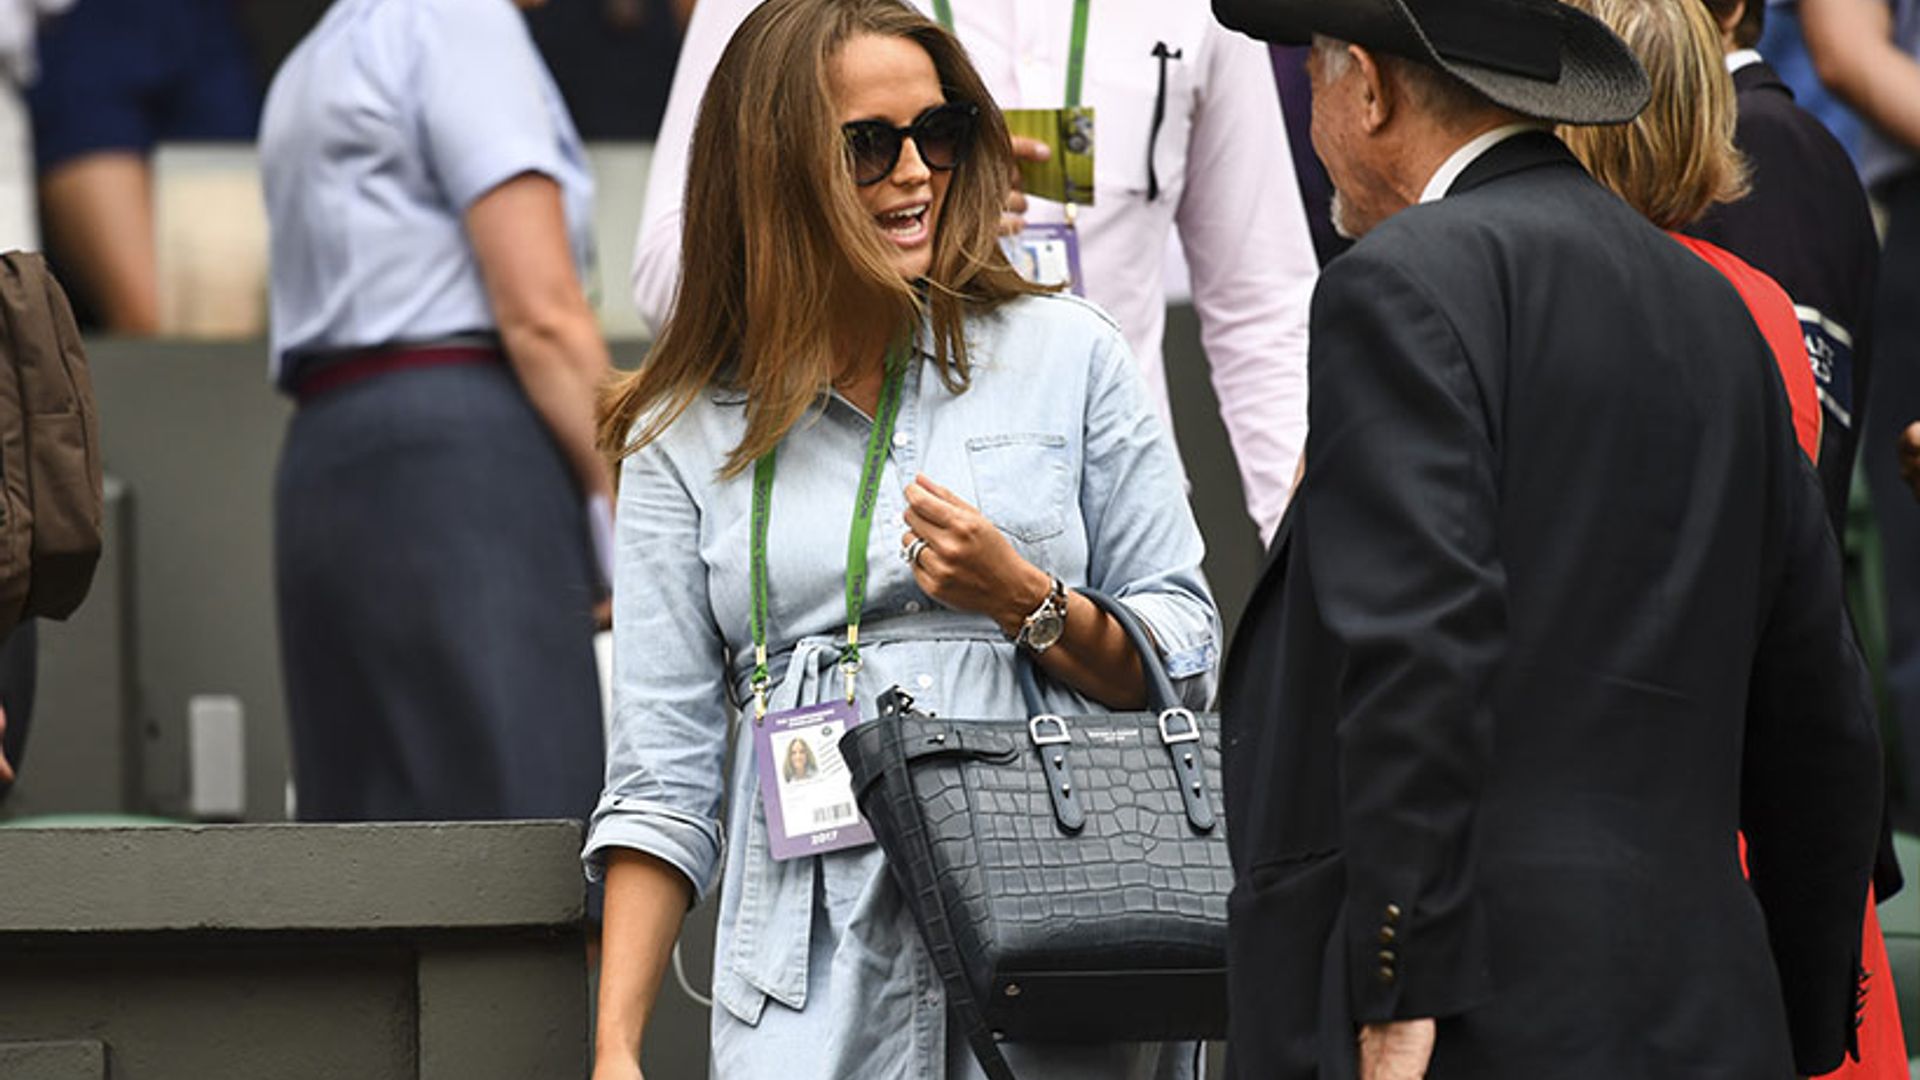 Stylish Kim Sears and Carole Middleton cheer on Andy Murray at Wimbledon